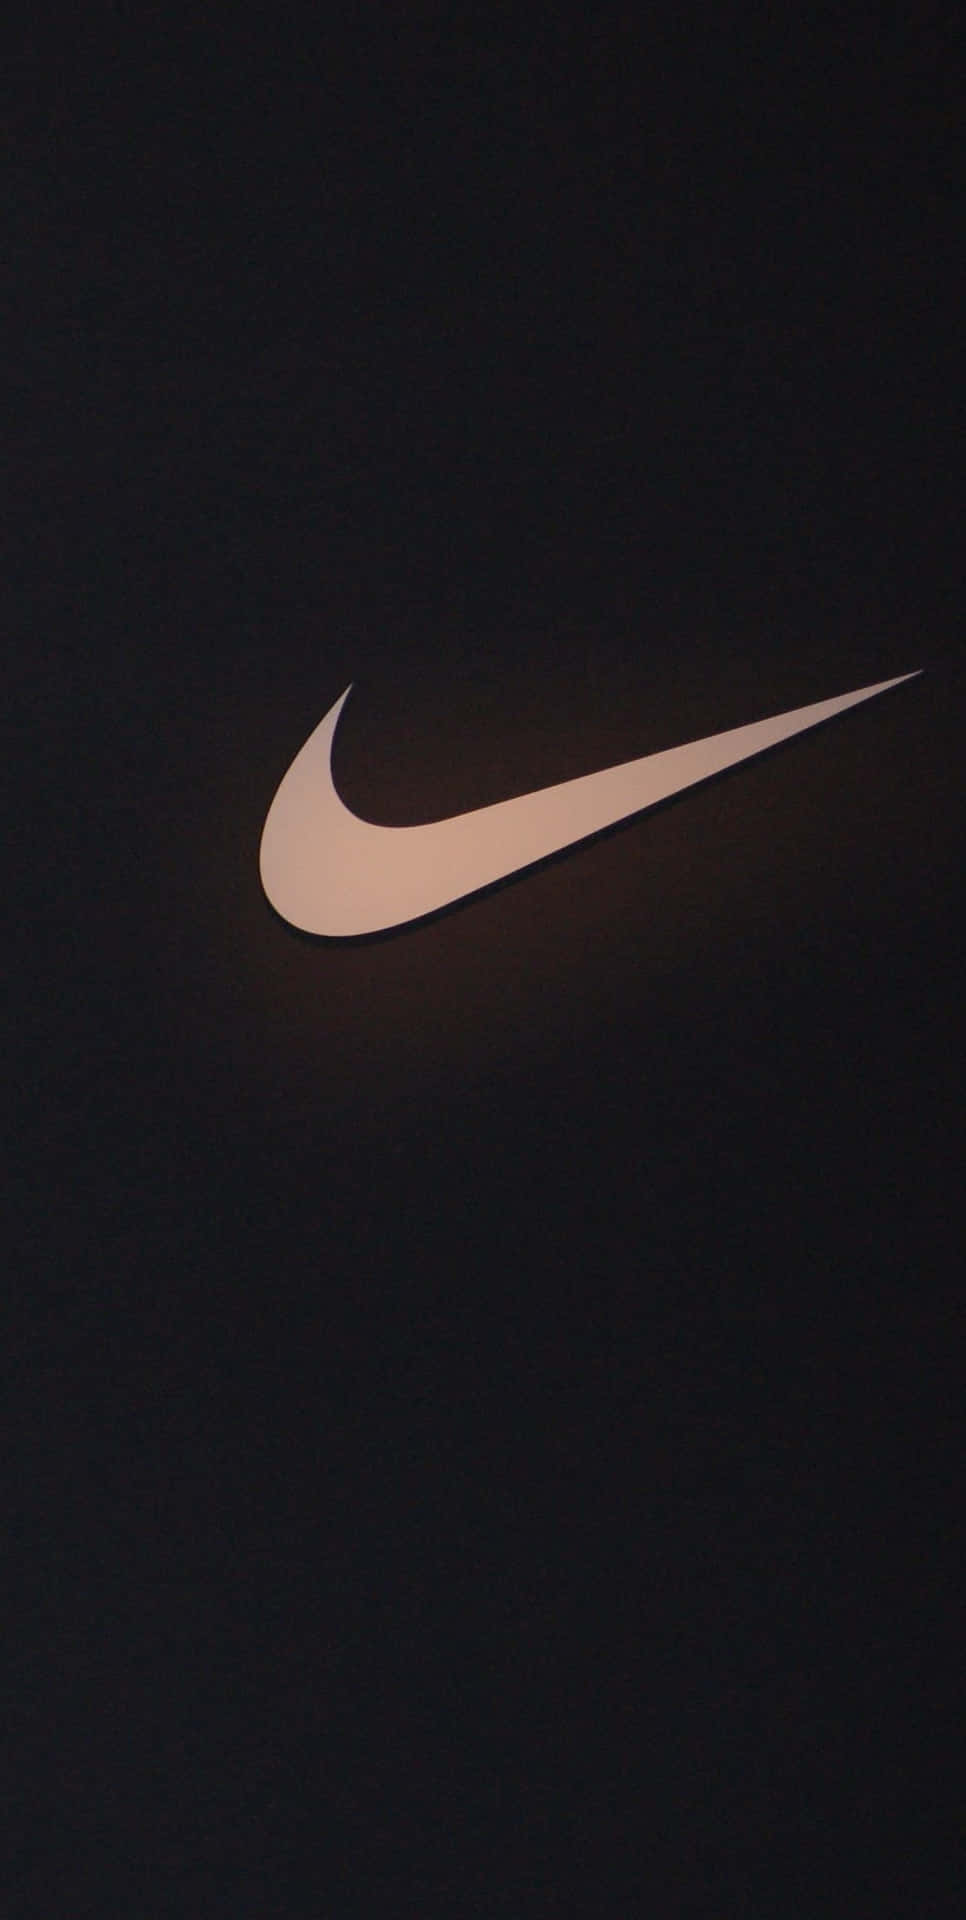 Den ikoniske Nike logo Wallpaper